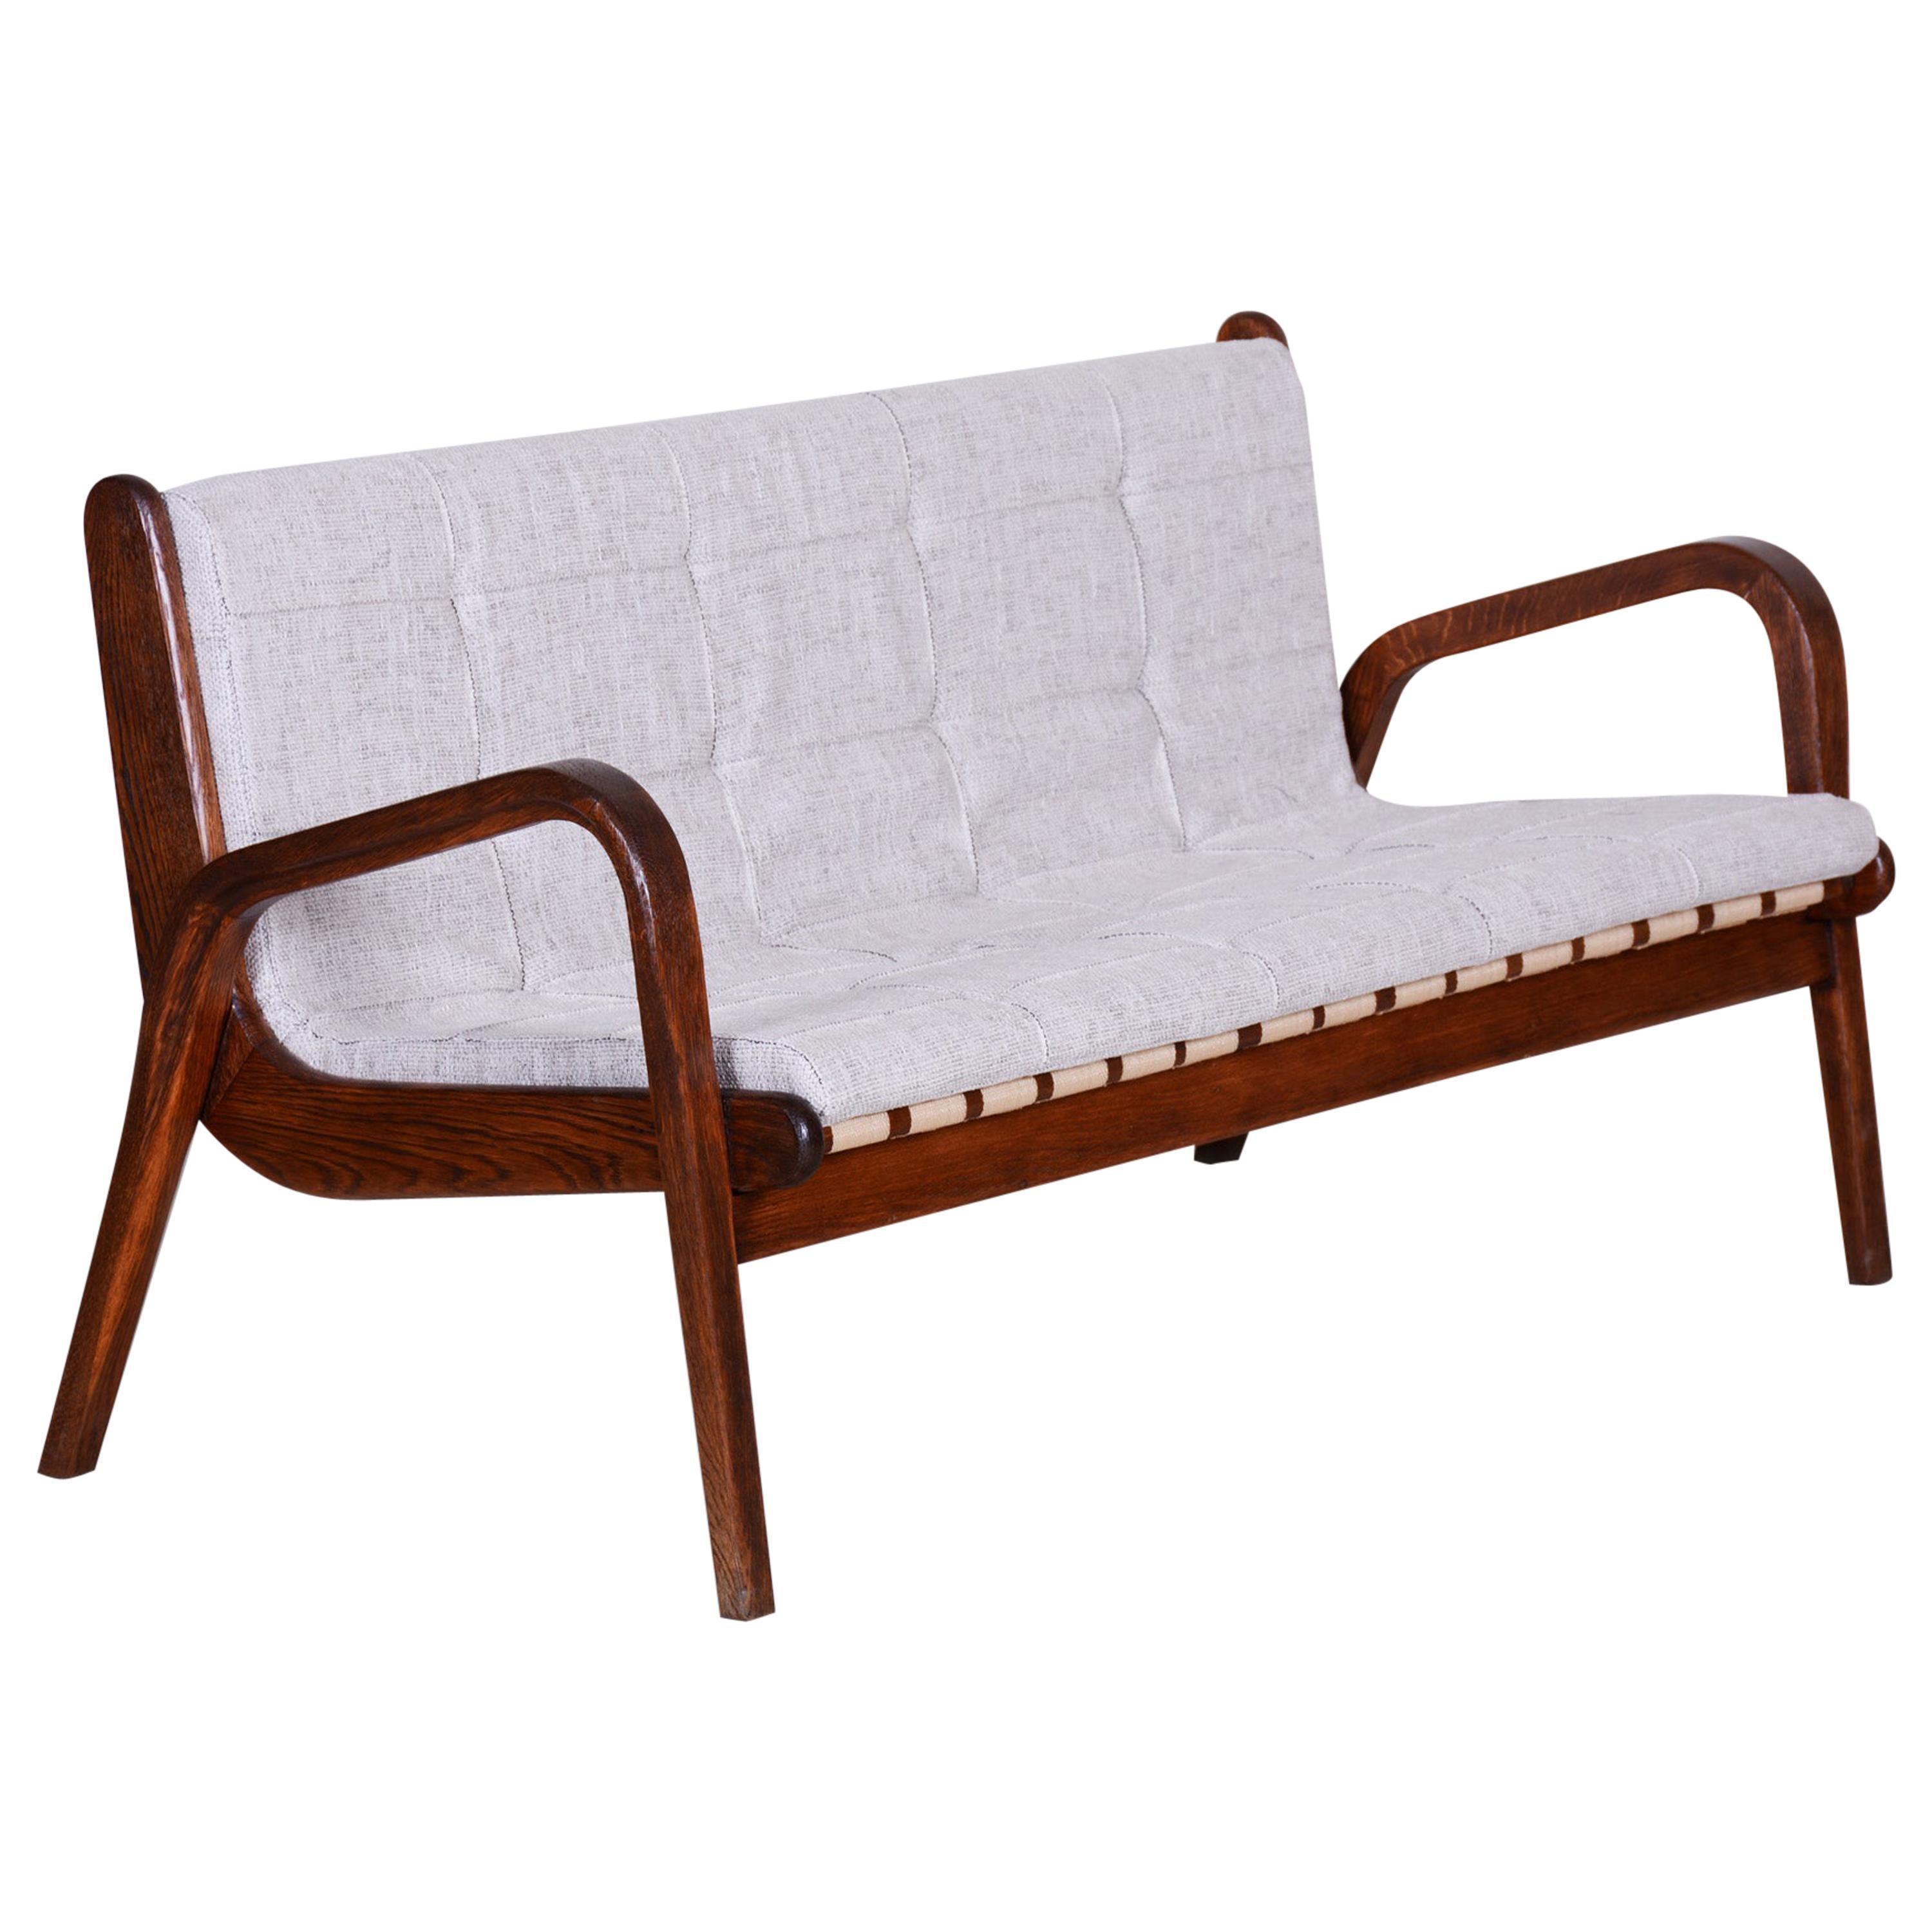 Czech Midcentury Brown Beech Sofa by Jan Vanek, New Upholstery, 1950s For Sale